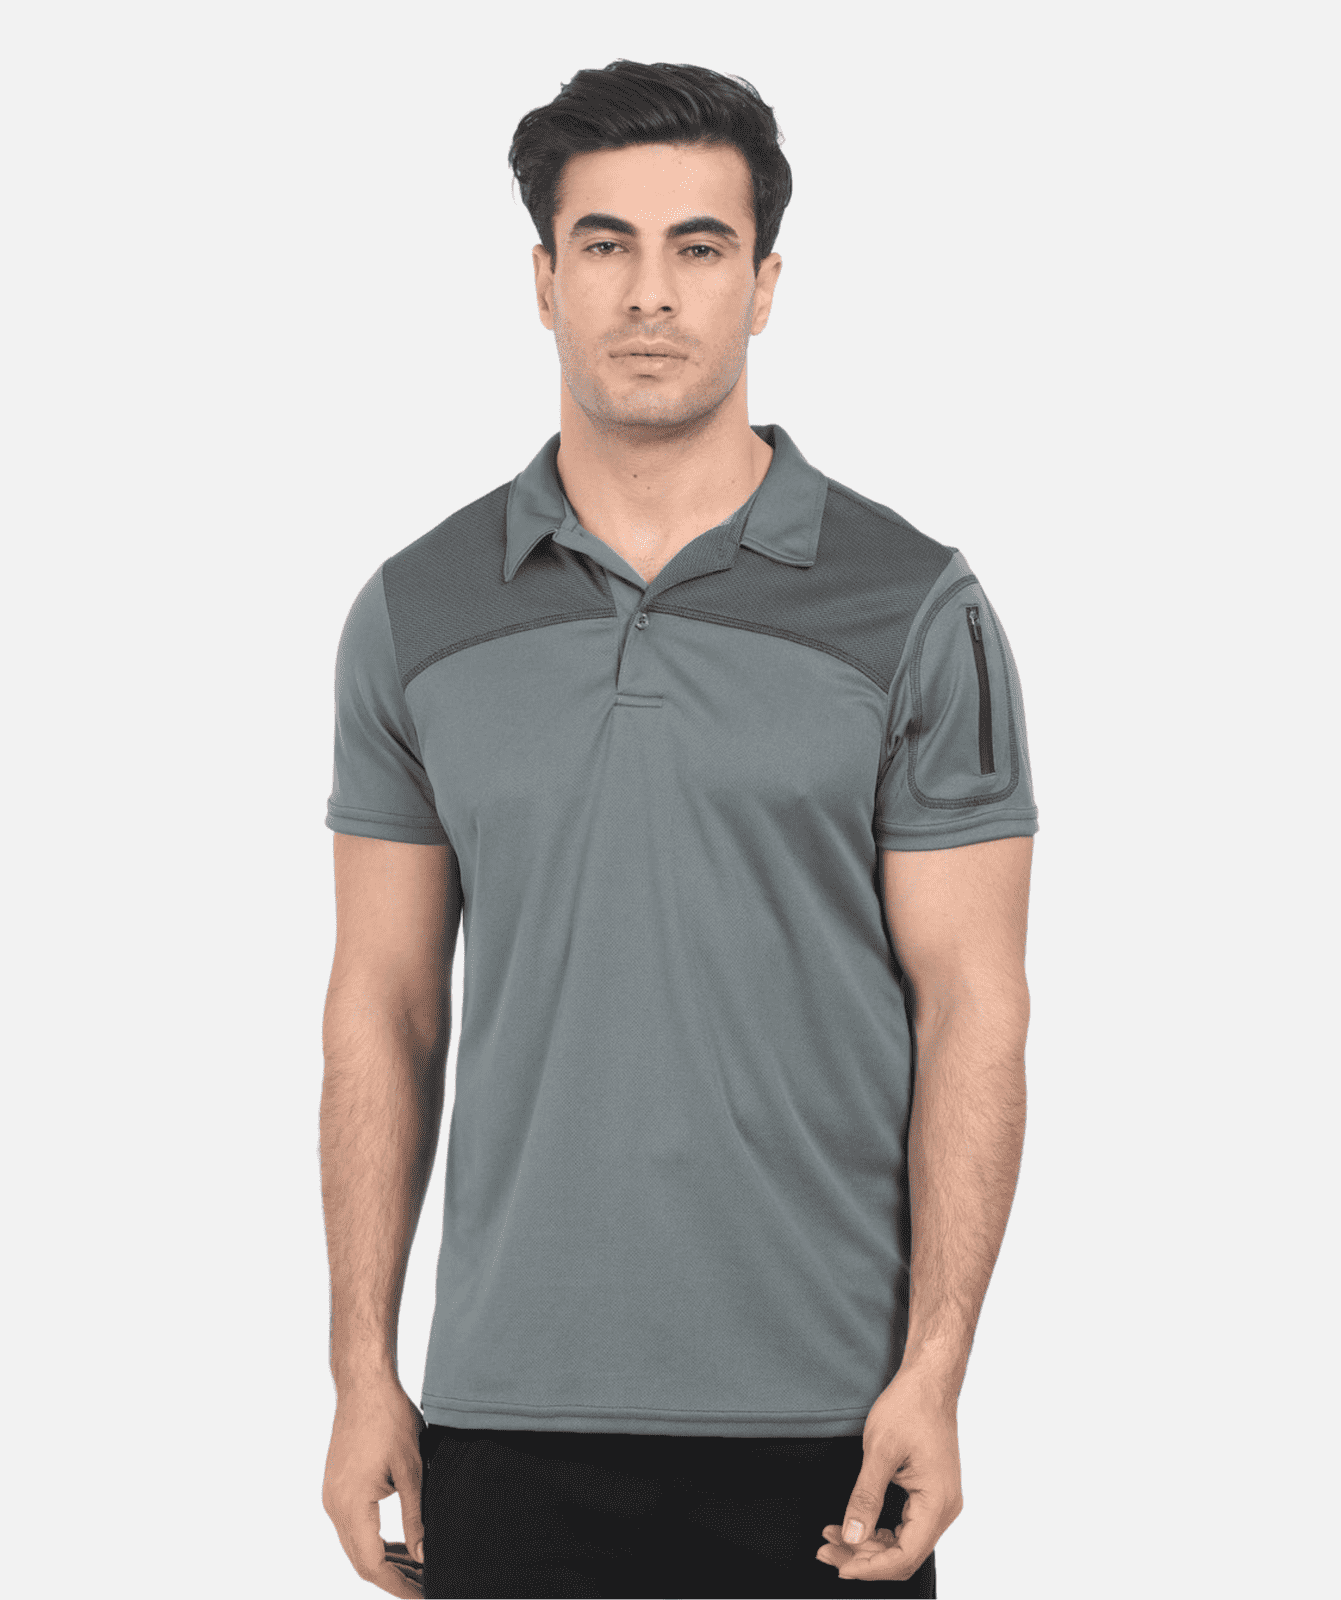 Tennis Half Sleeve Men's T-Shirt with Collar | Dry-Mesh | Sleeve Pocket | Aero Flow TPK117 Men's Tshirt